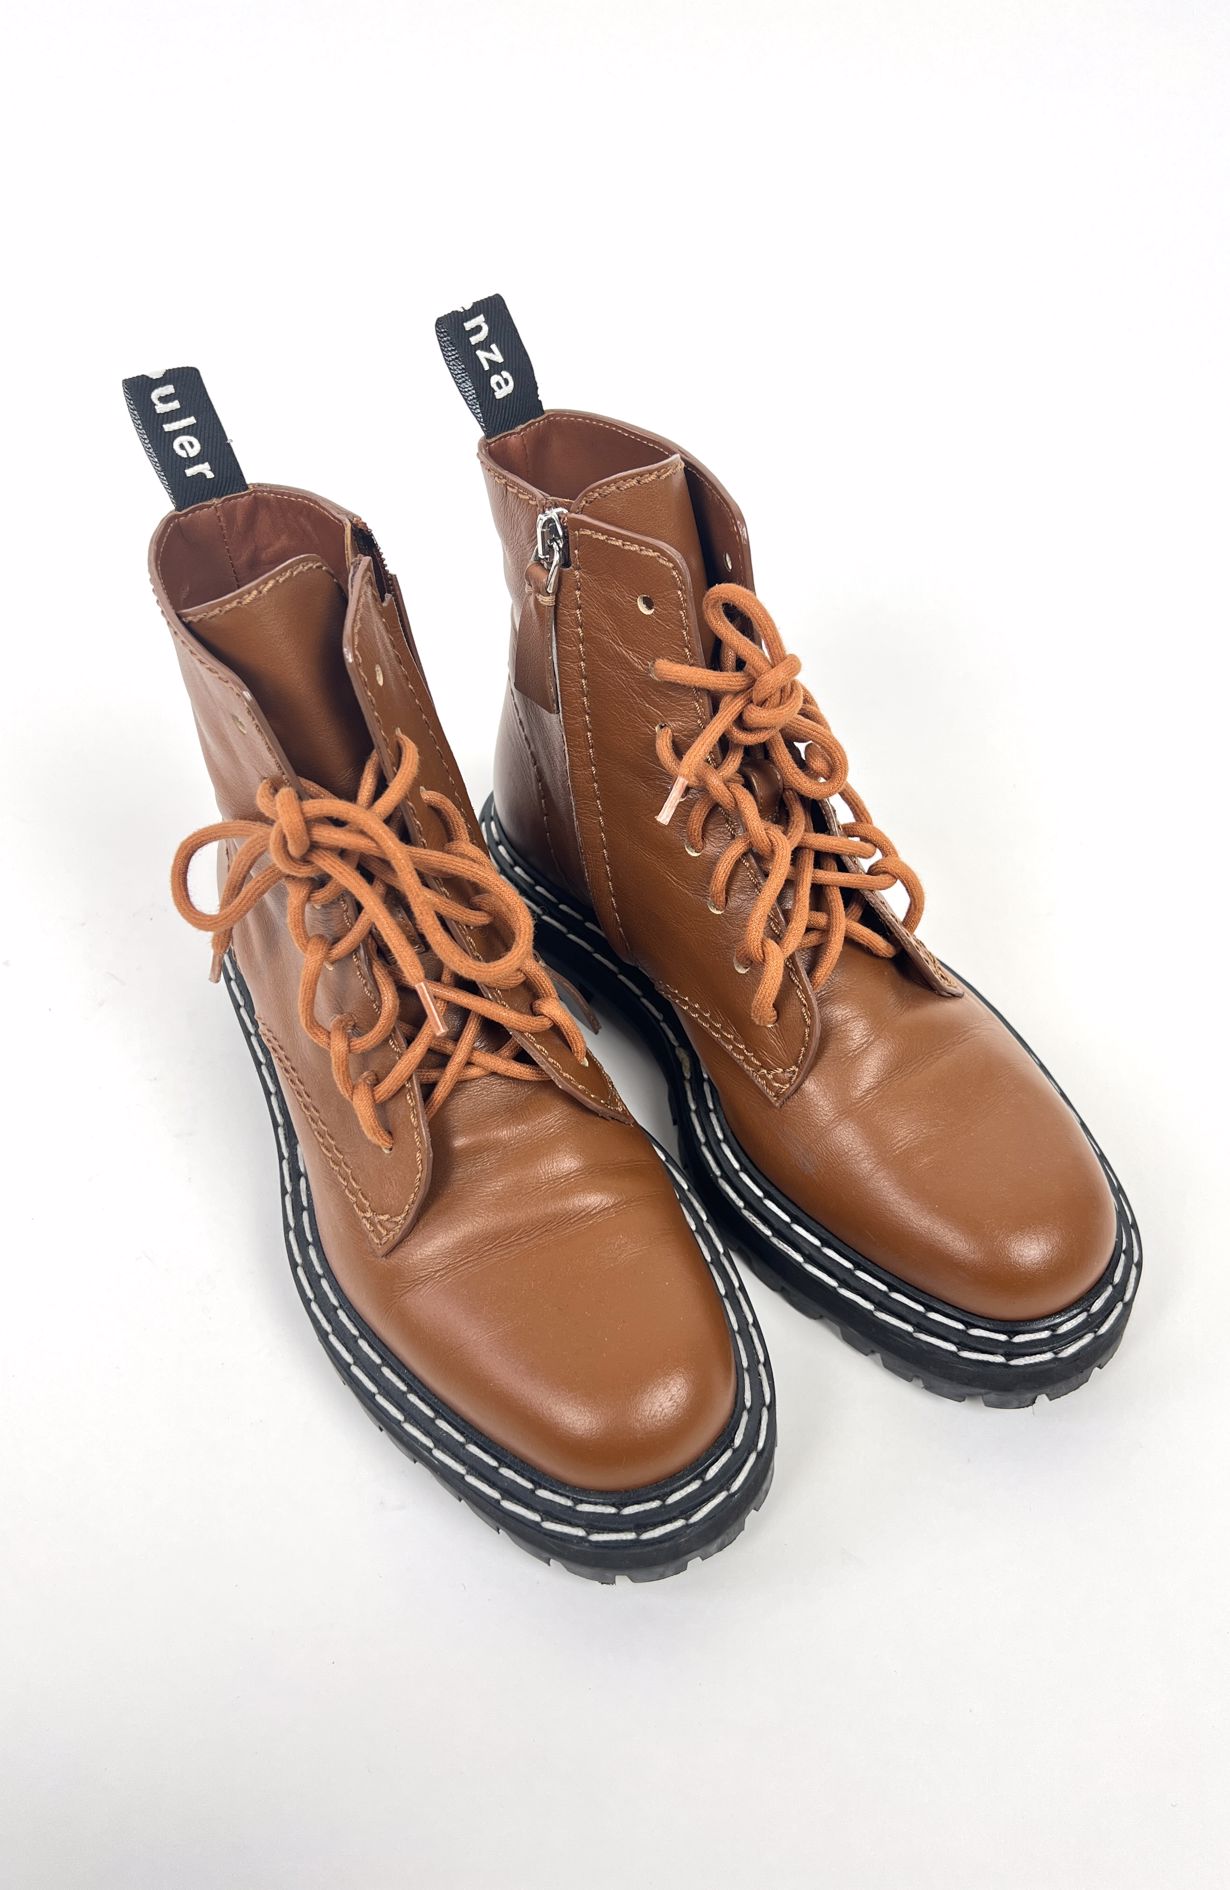 Proenza Schouler boots brown size 37